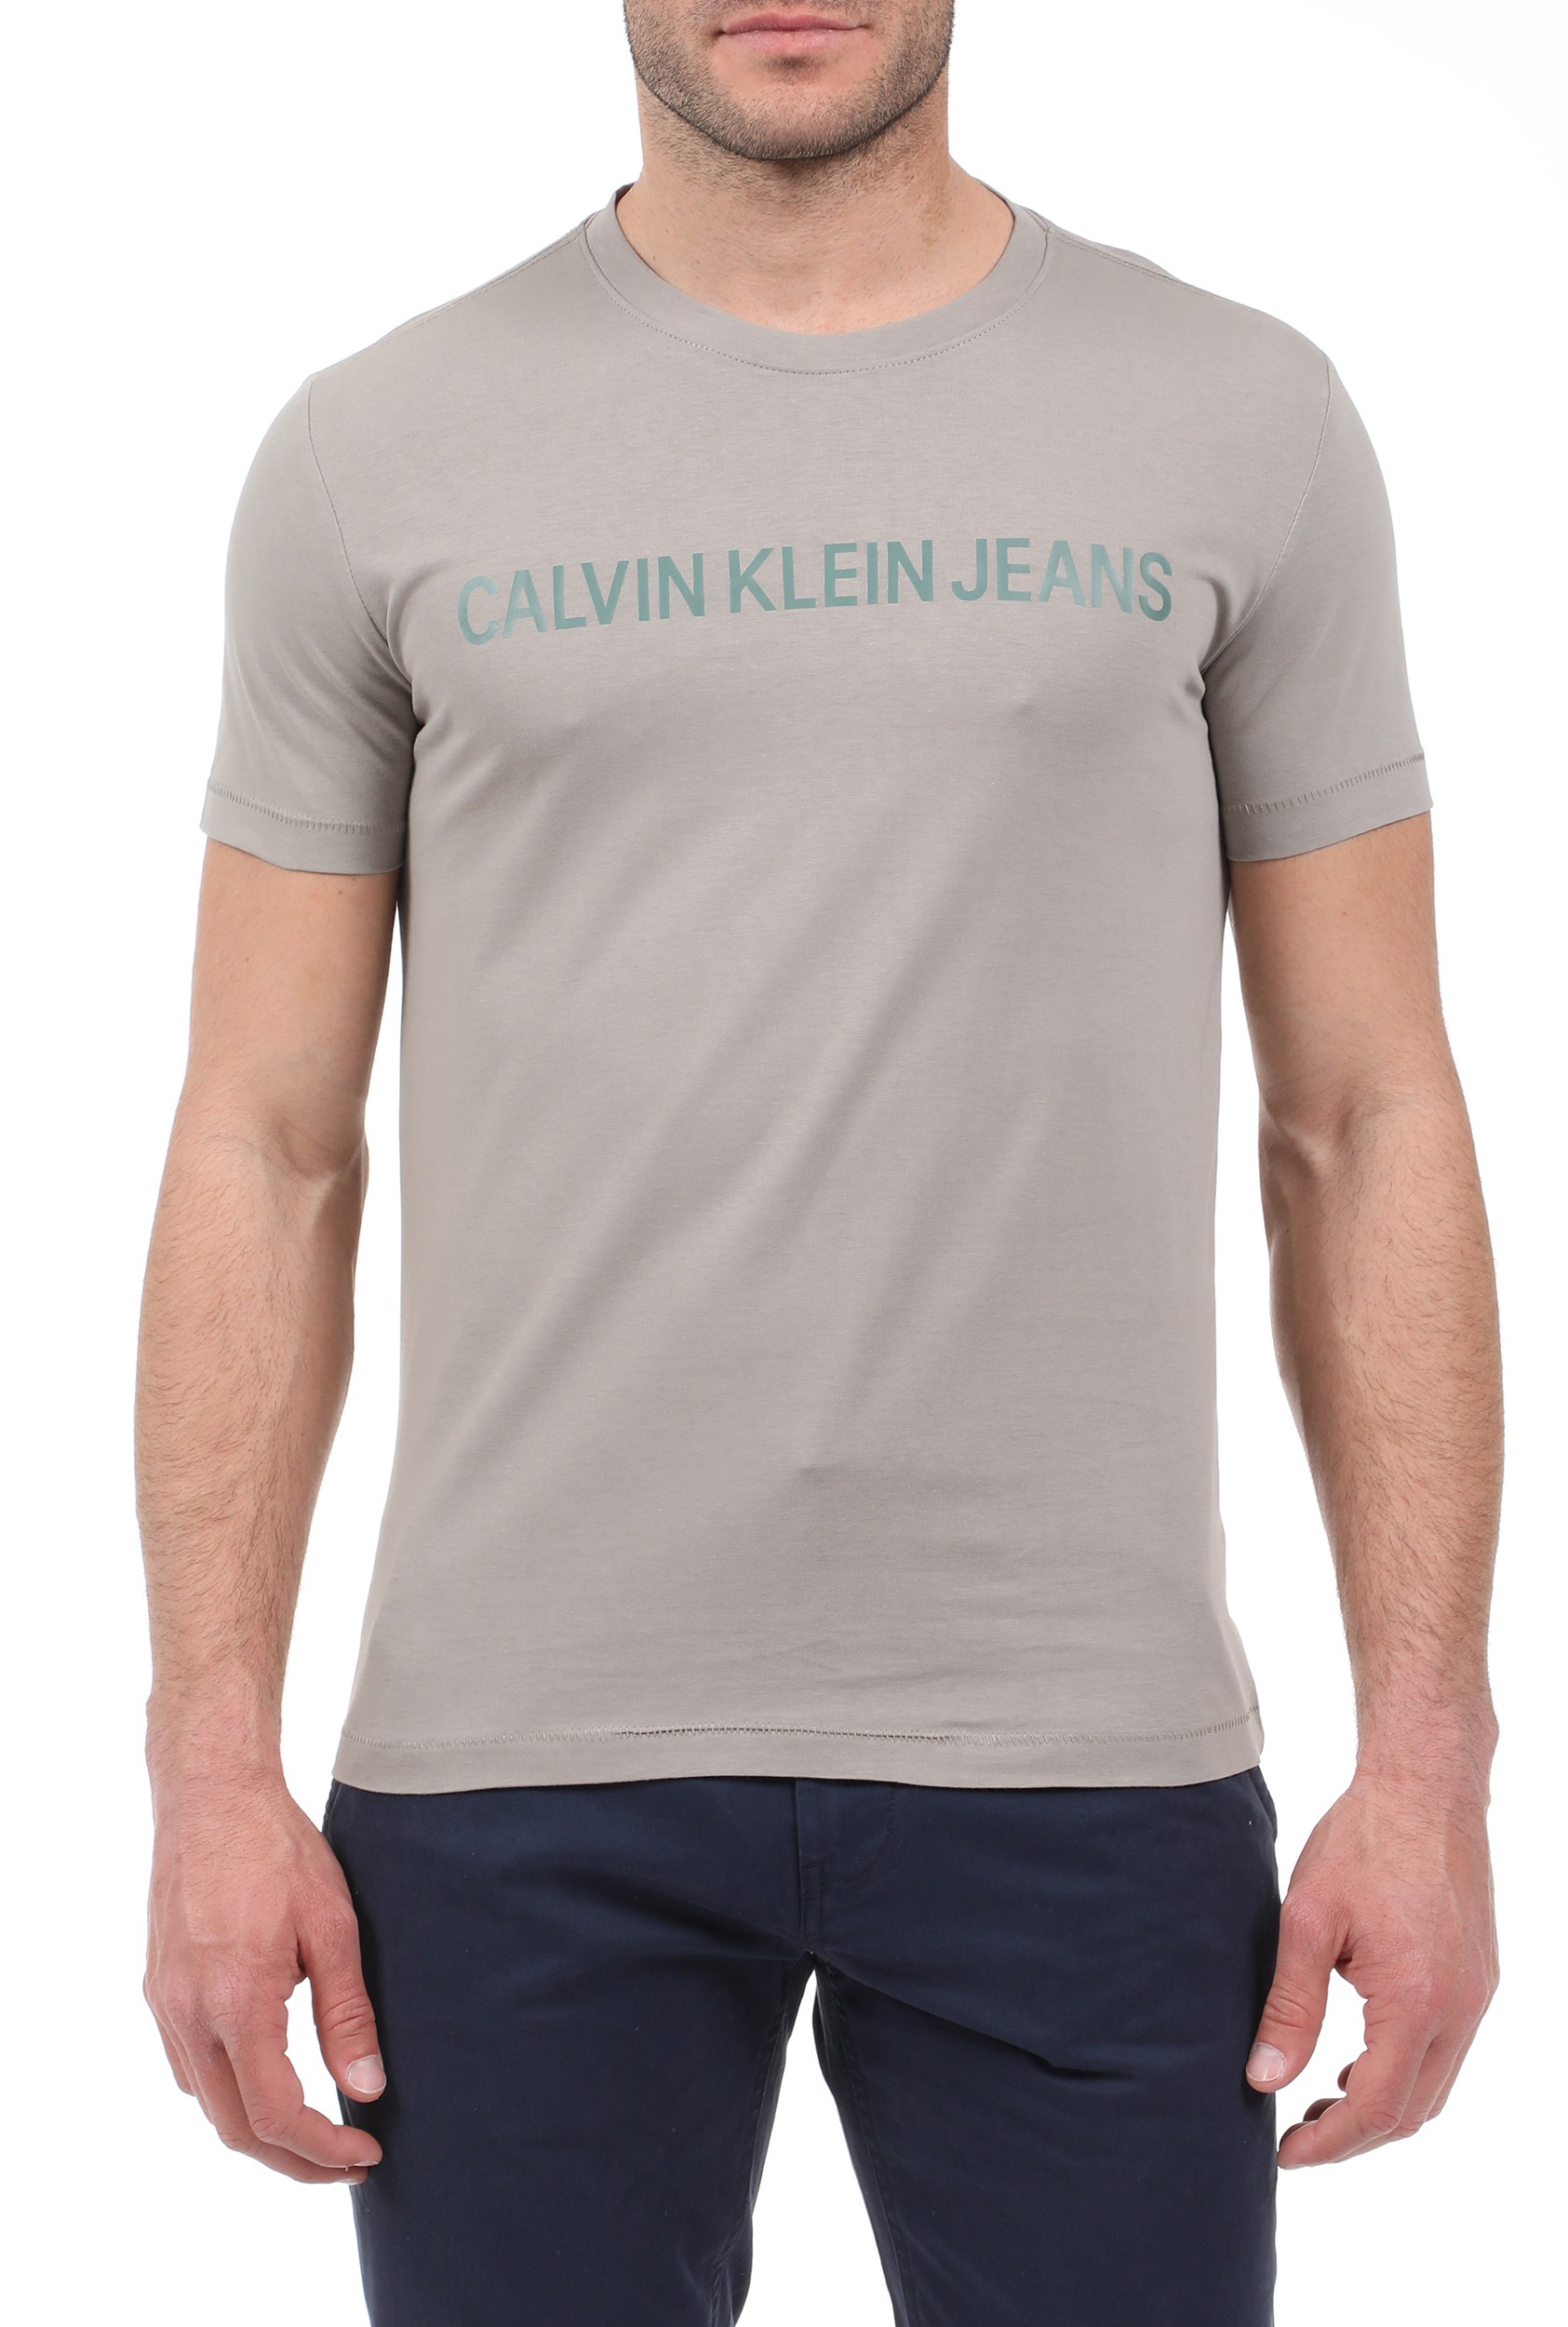 CALVIN KLEIN JEANS – Ανδρικο t-shirt CALVIN KLEIN JEANS μπεζ